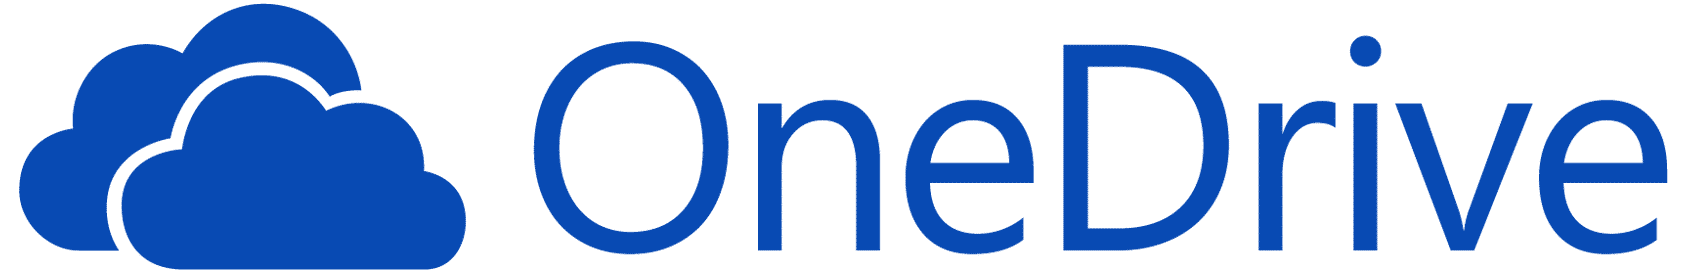 微软OneDrive标志